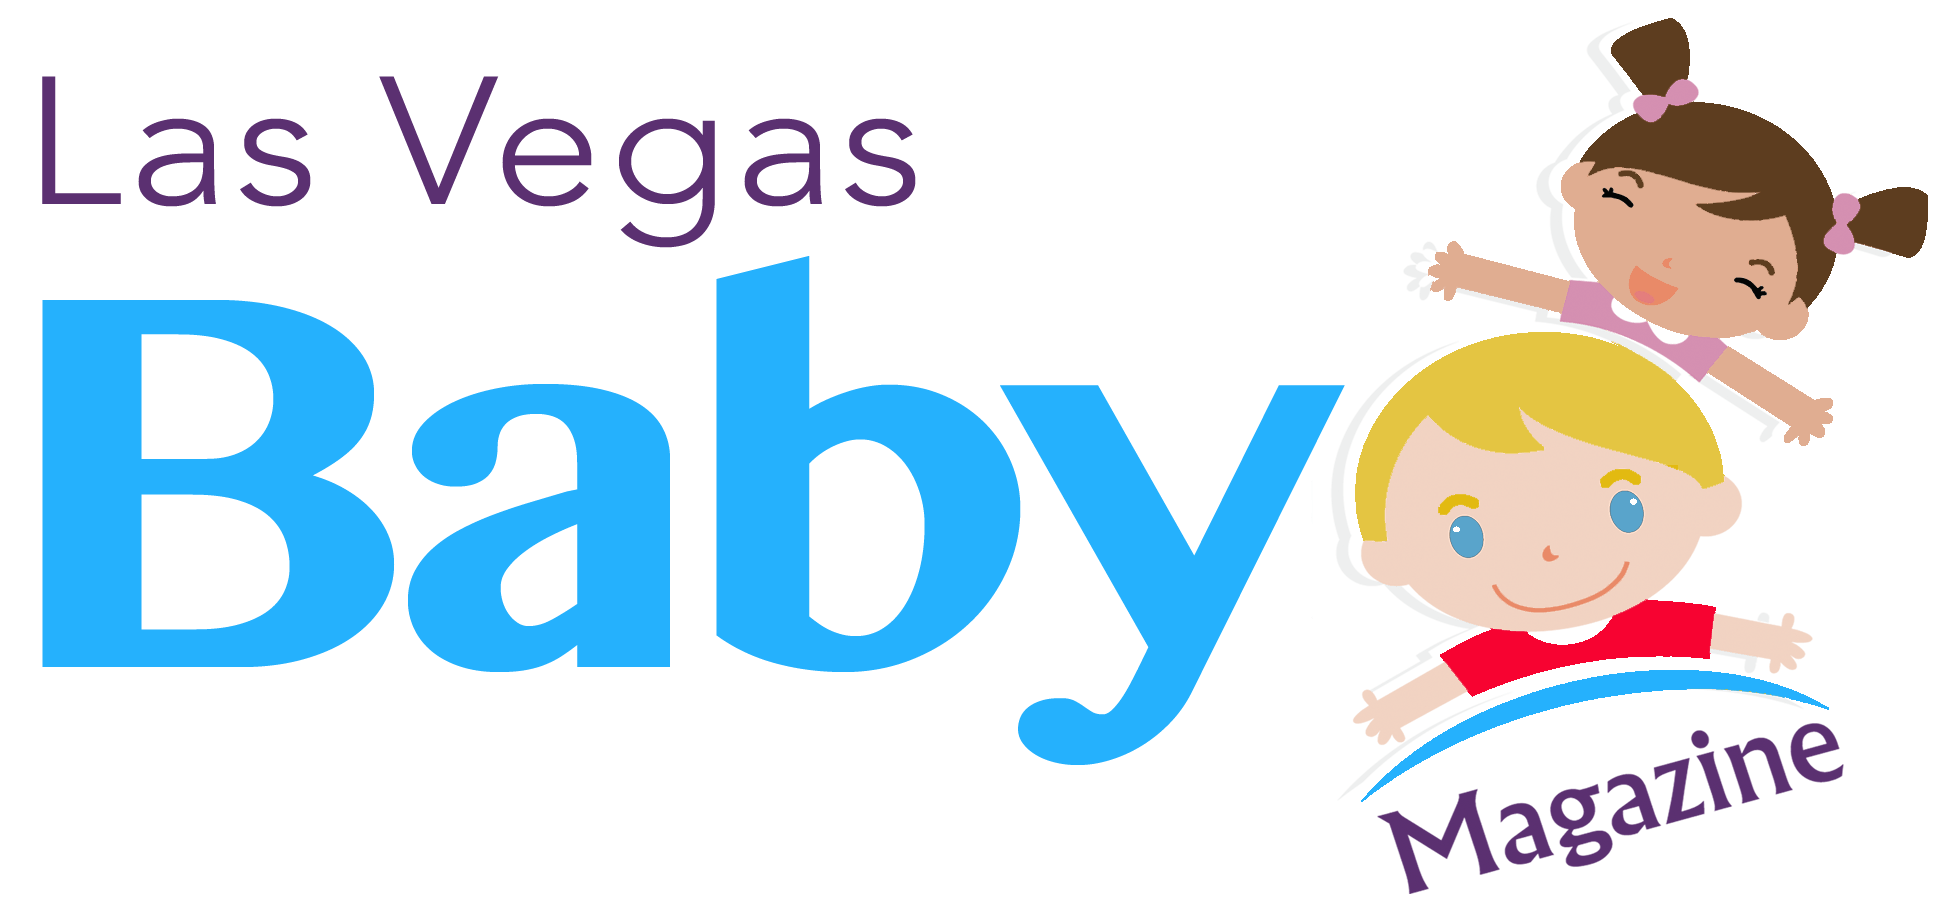 LAS Vegas Baby